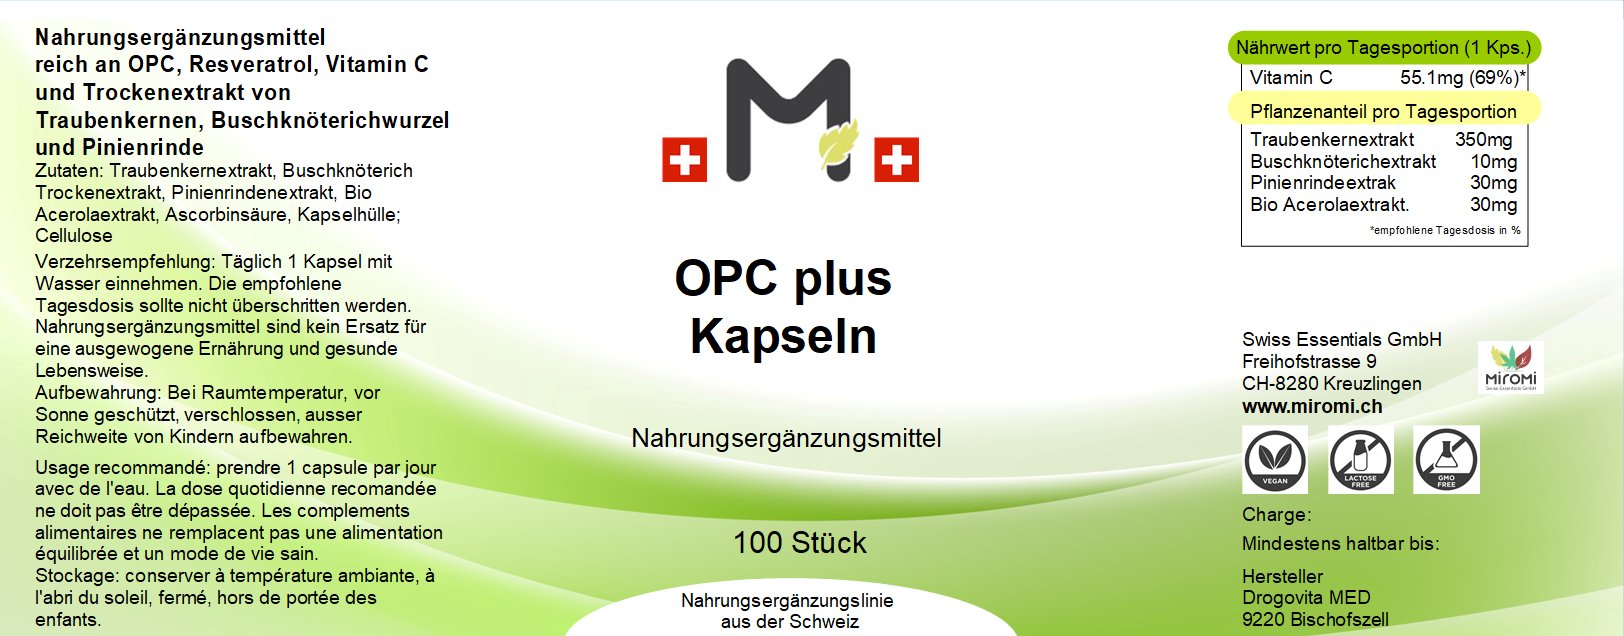 OPC plus Kapseln - MIROMI - Swiss Essentials GmbH